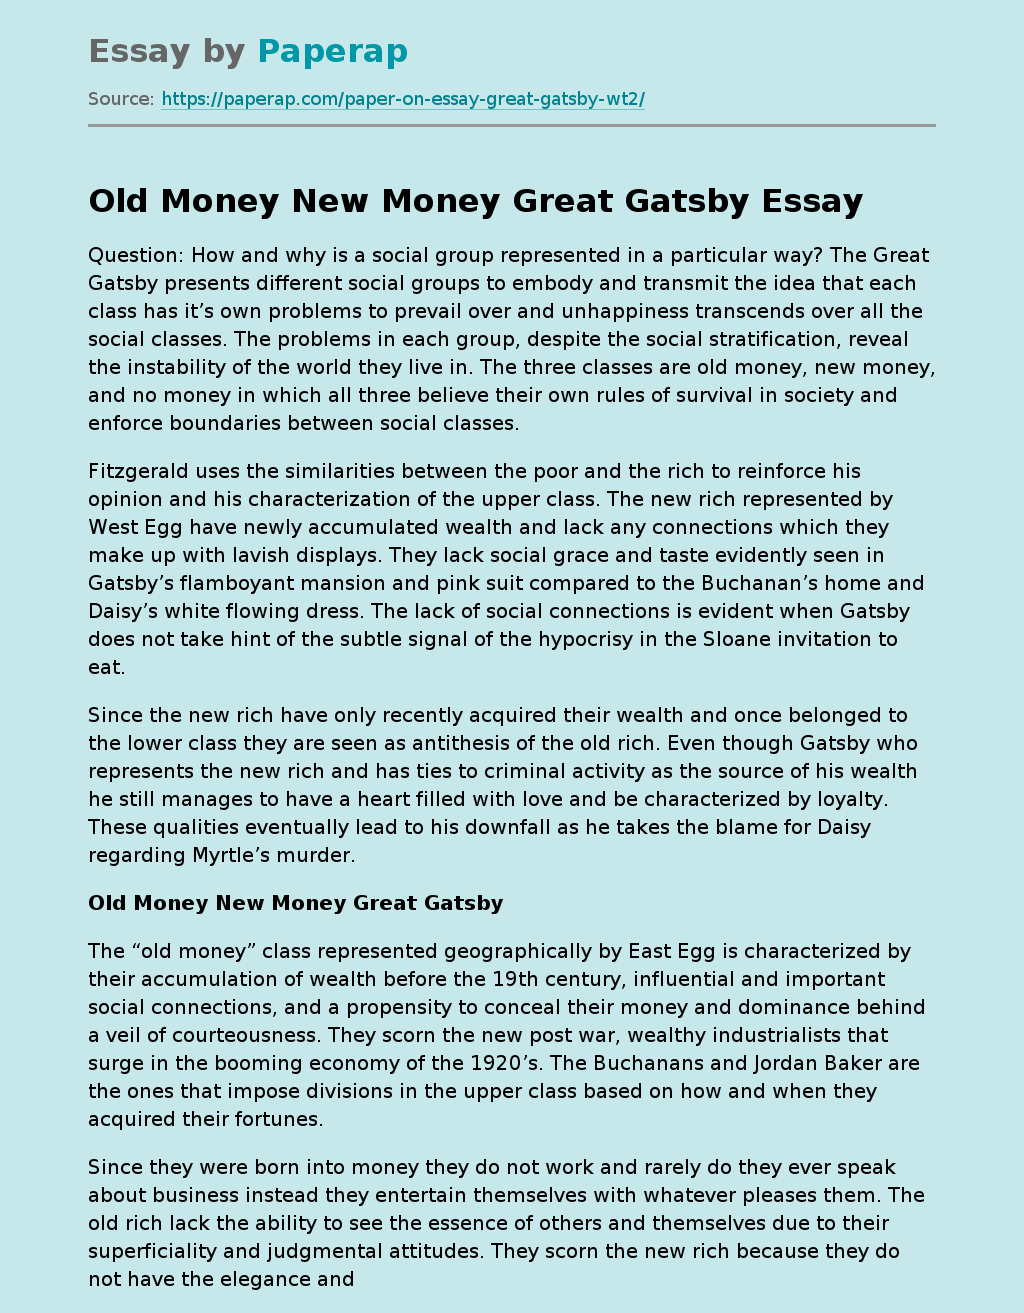 Old Money New Money Great Gatsby